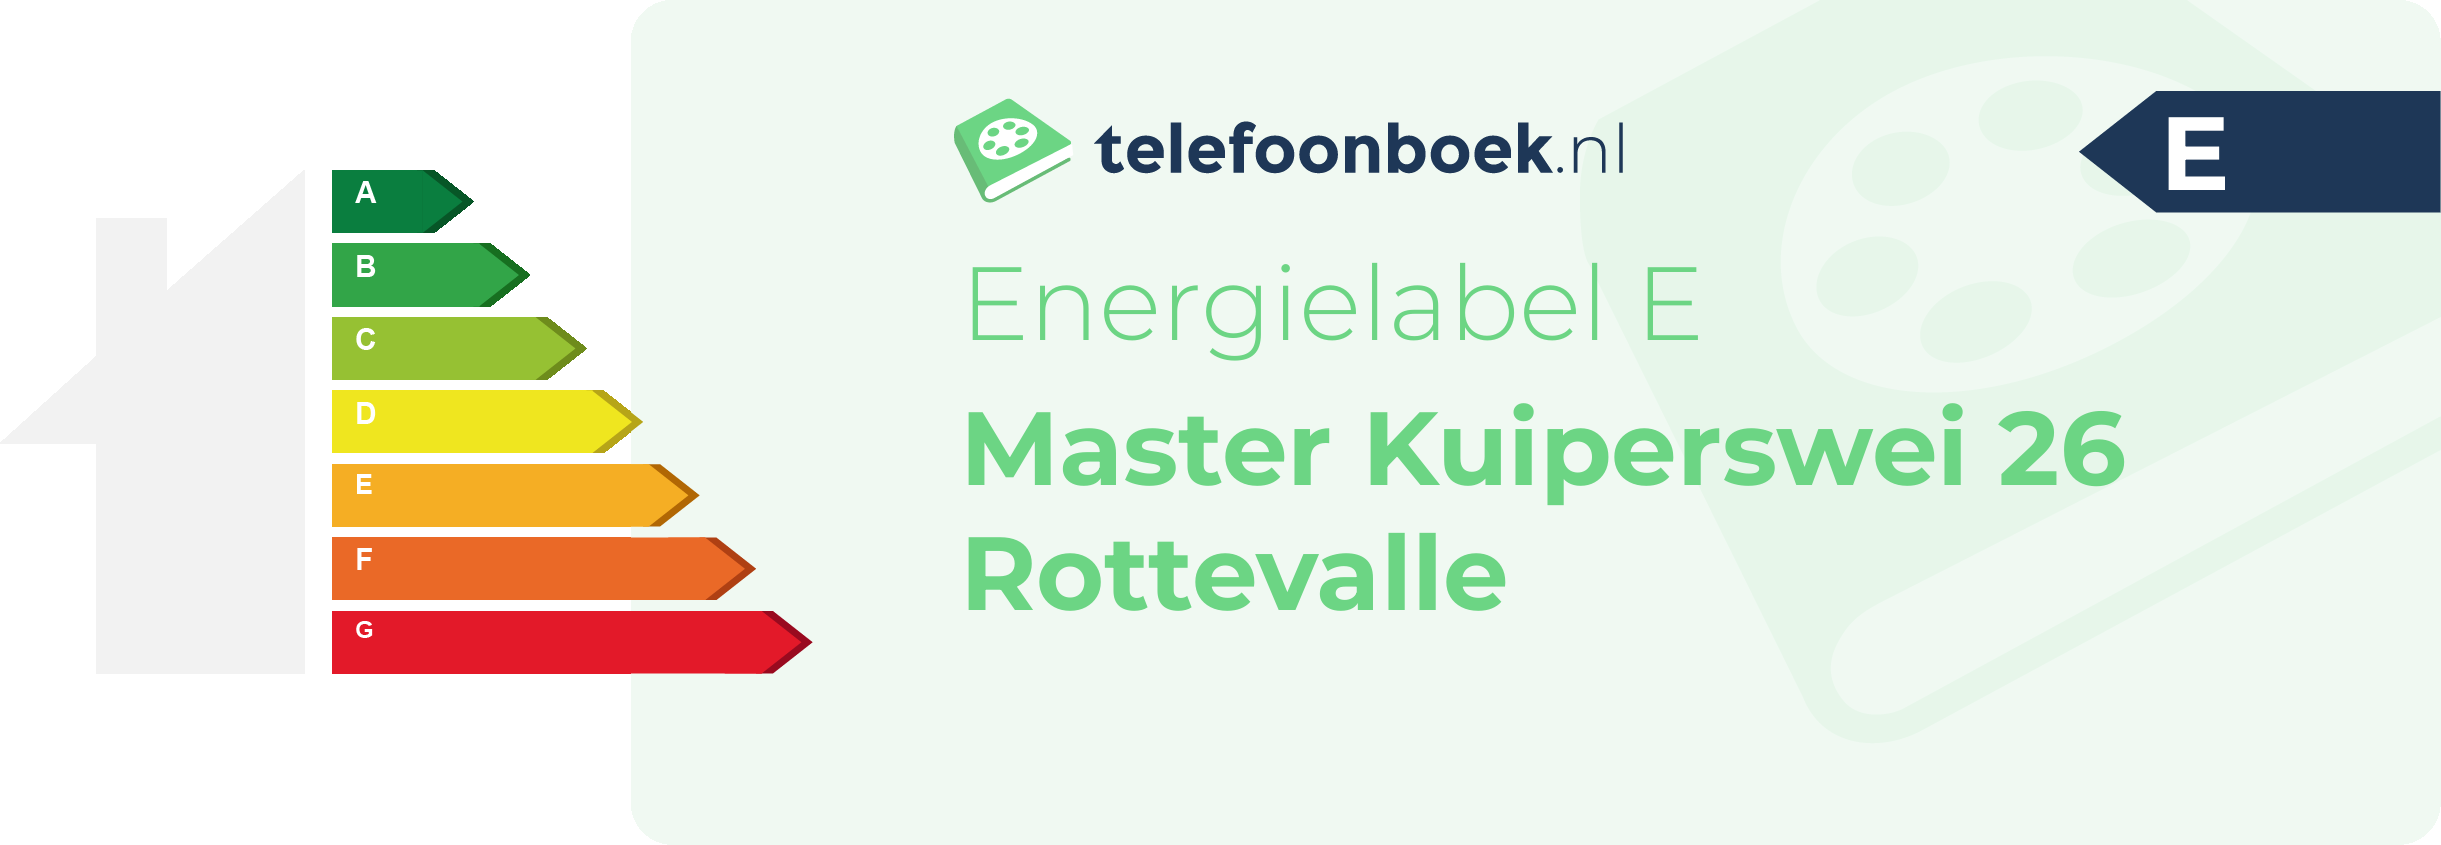 Energielabel Master Kuiperswei 26 Rottevalle